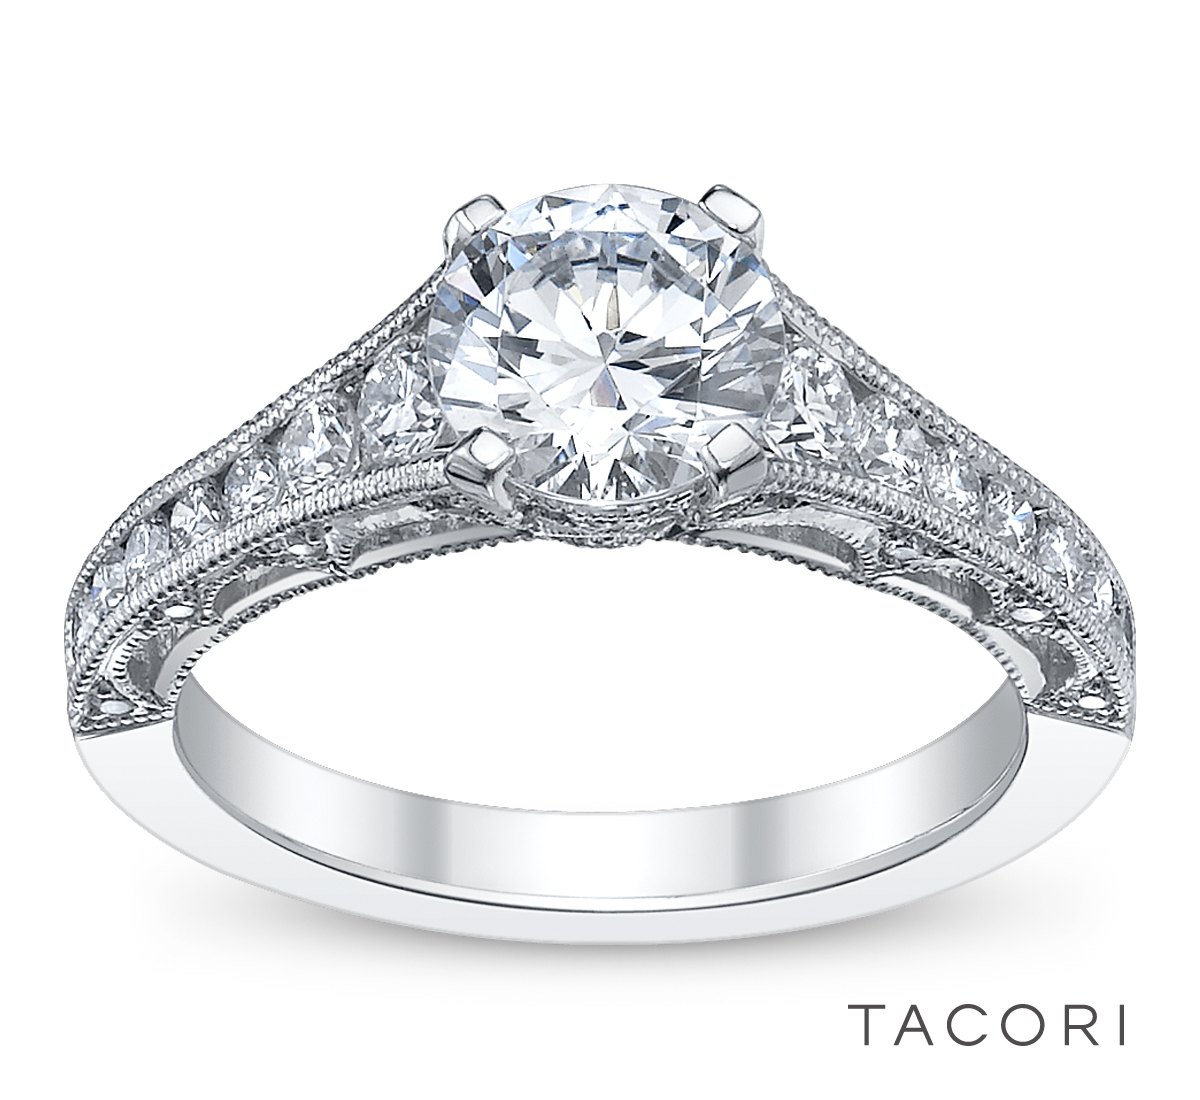 Tacori Engagement Ring at www